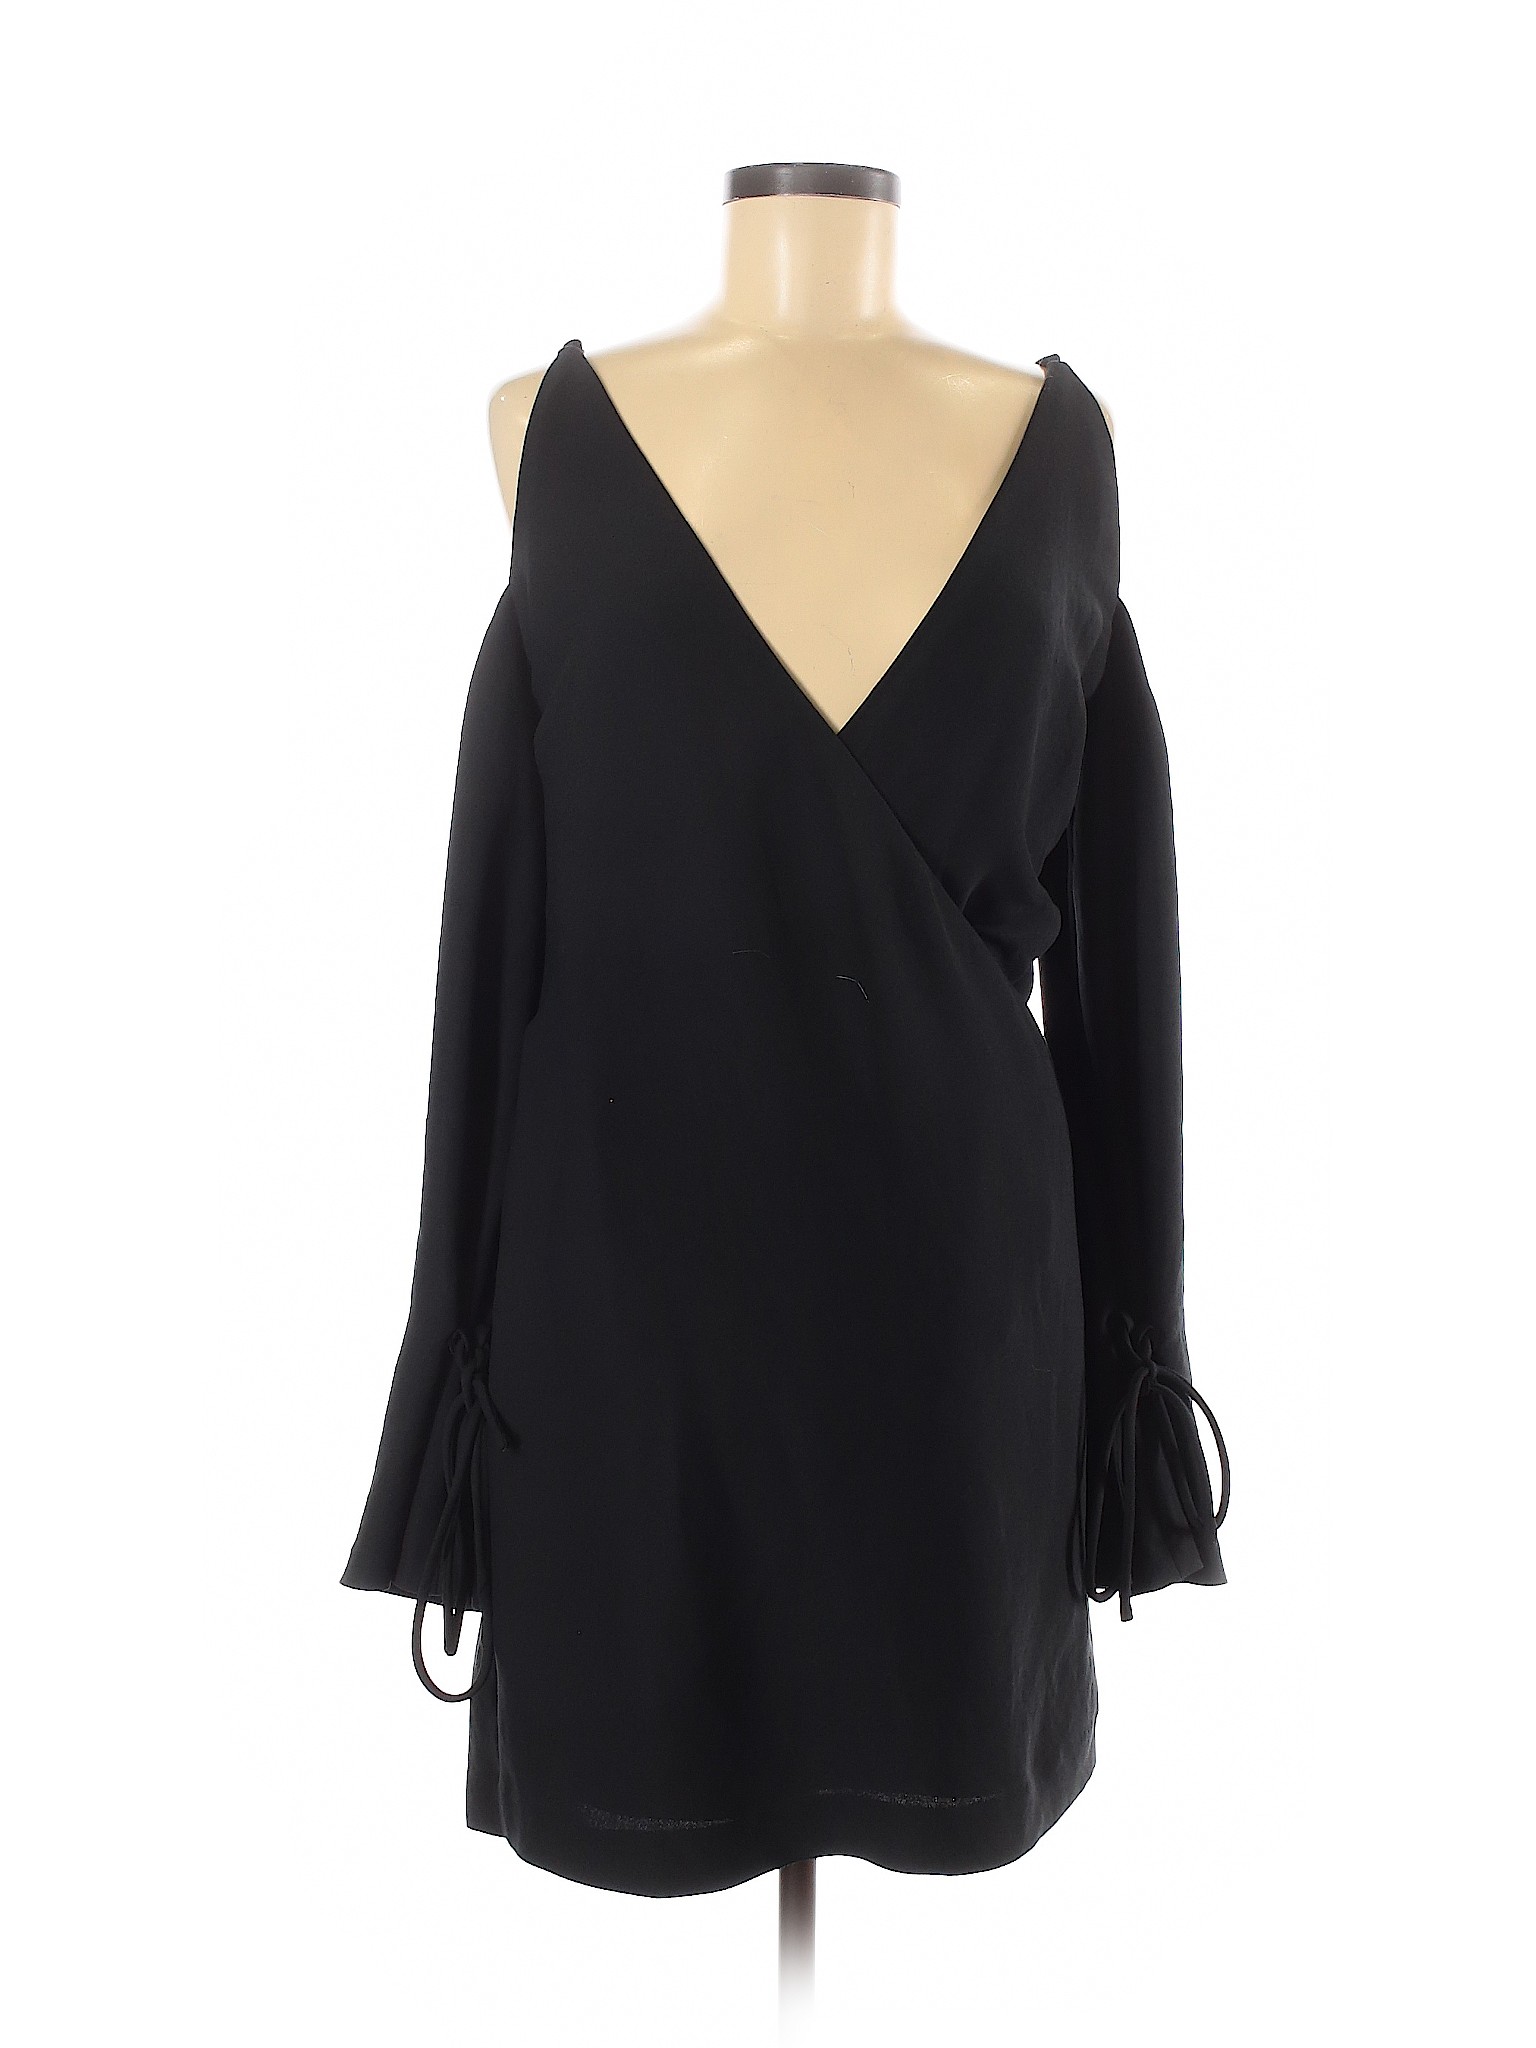 NWT IRO Women Black Casual Dress 38 french | eBay